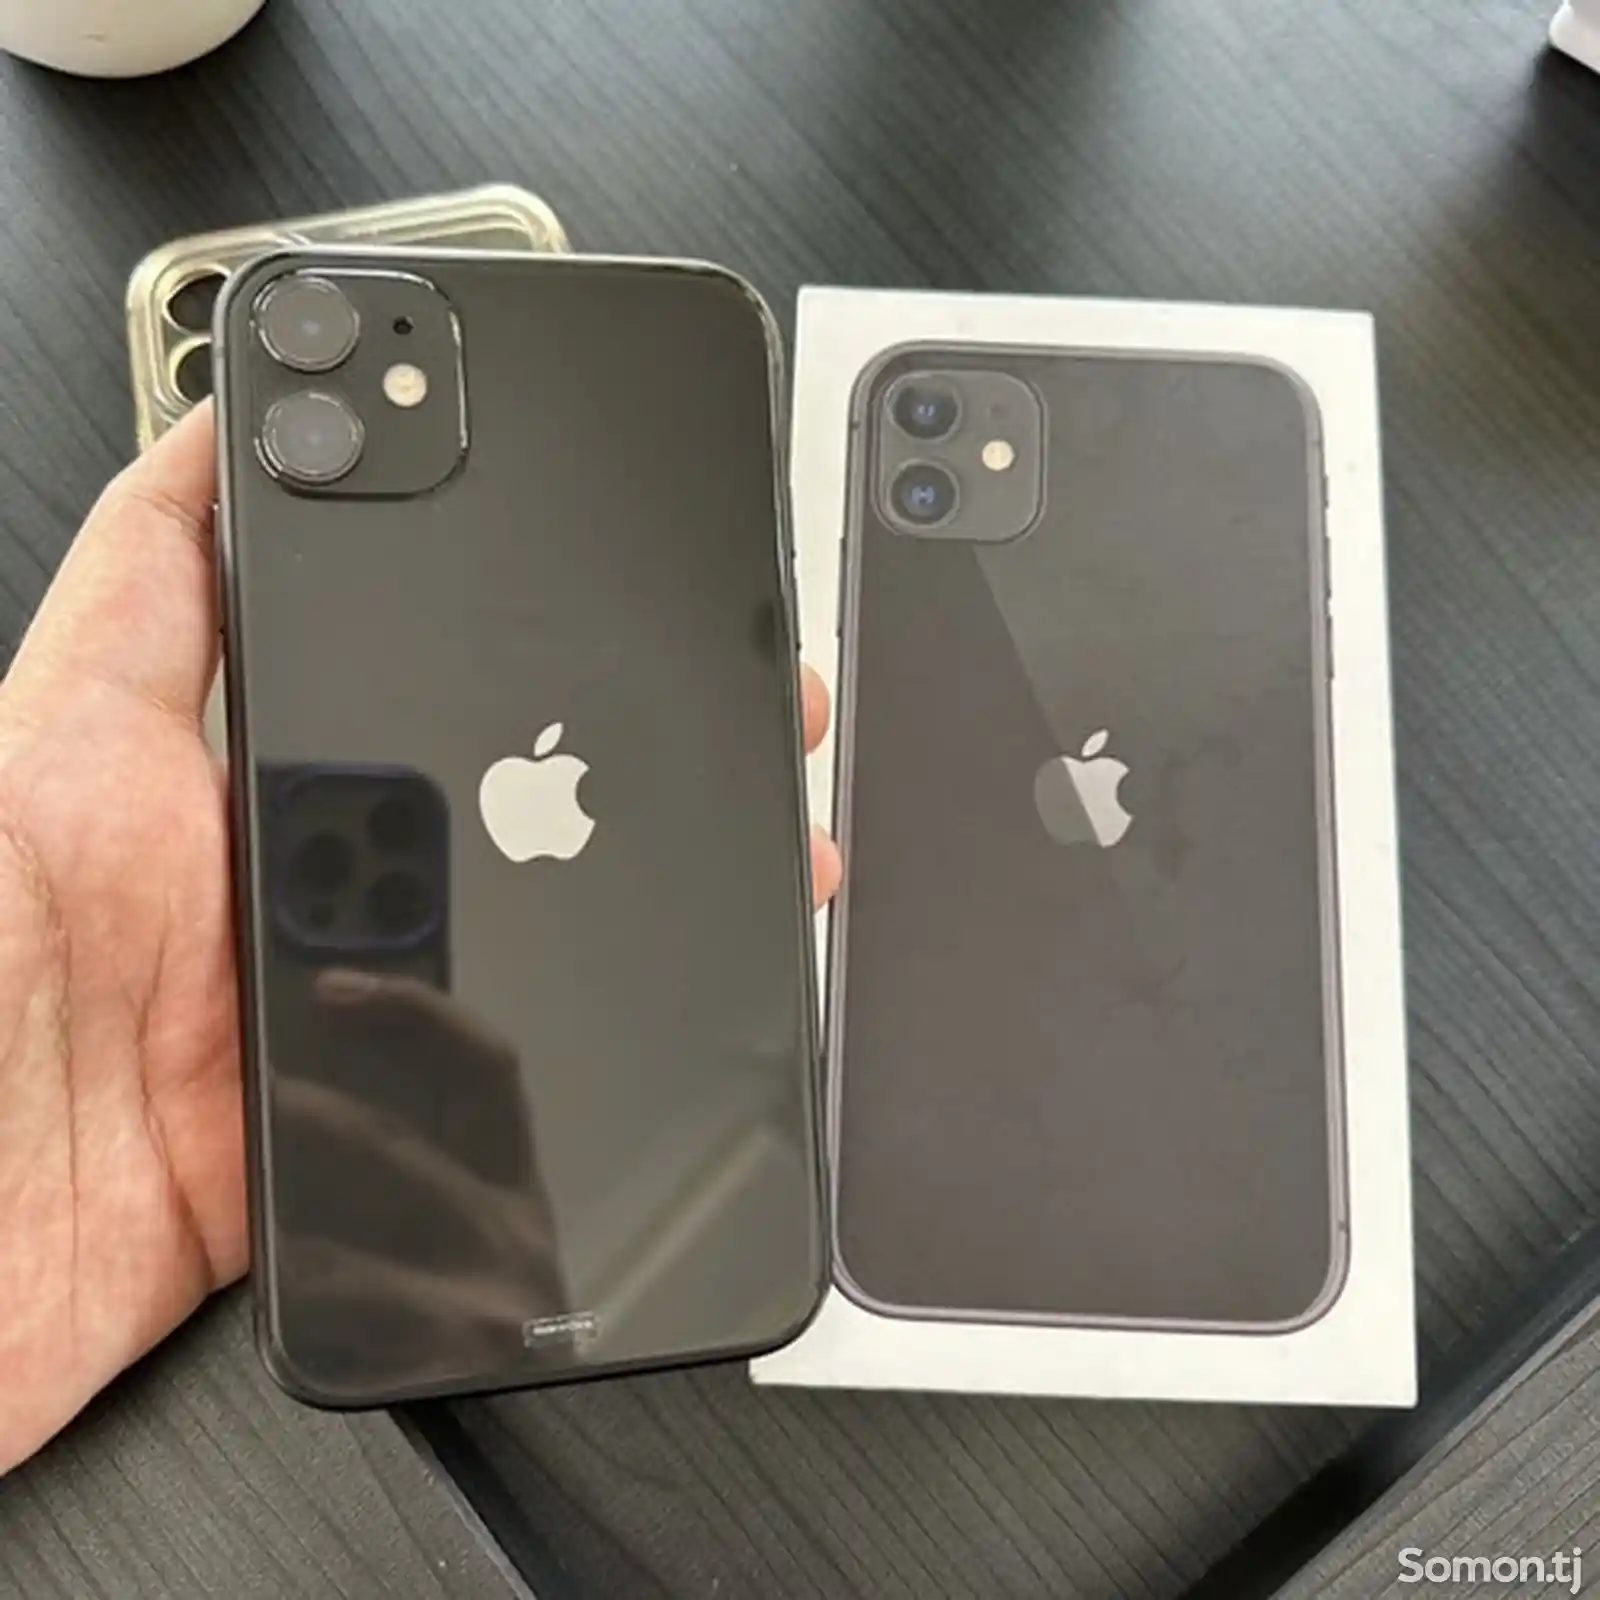 Apple iPhone 11, 128 gb, Black-2